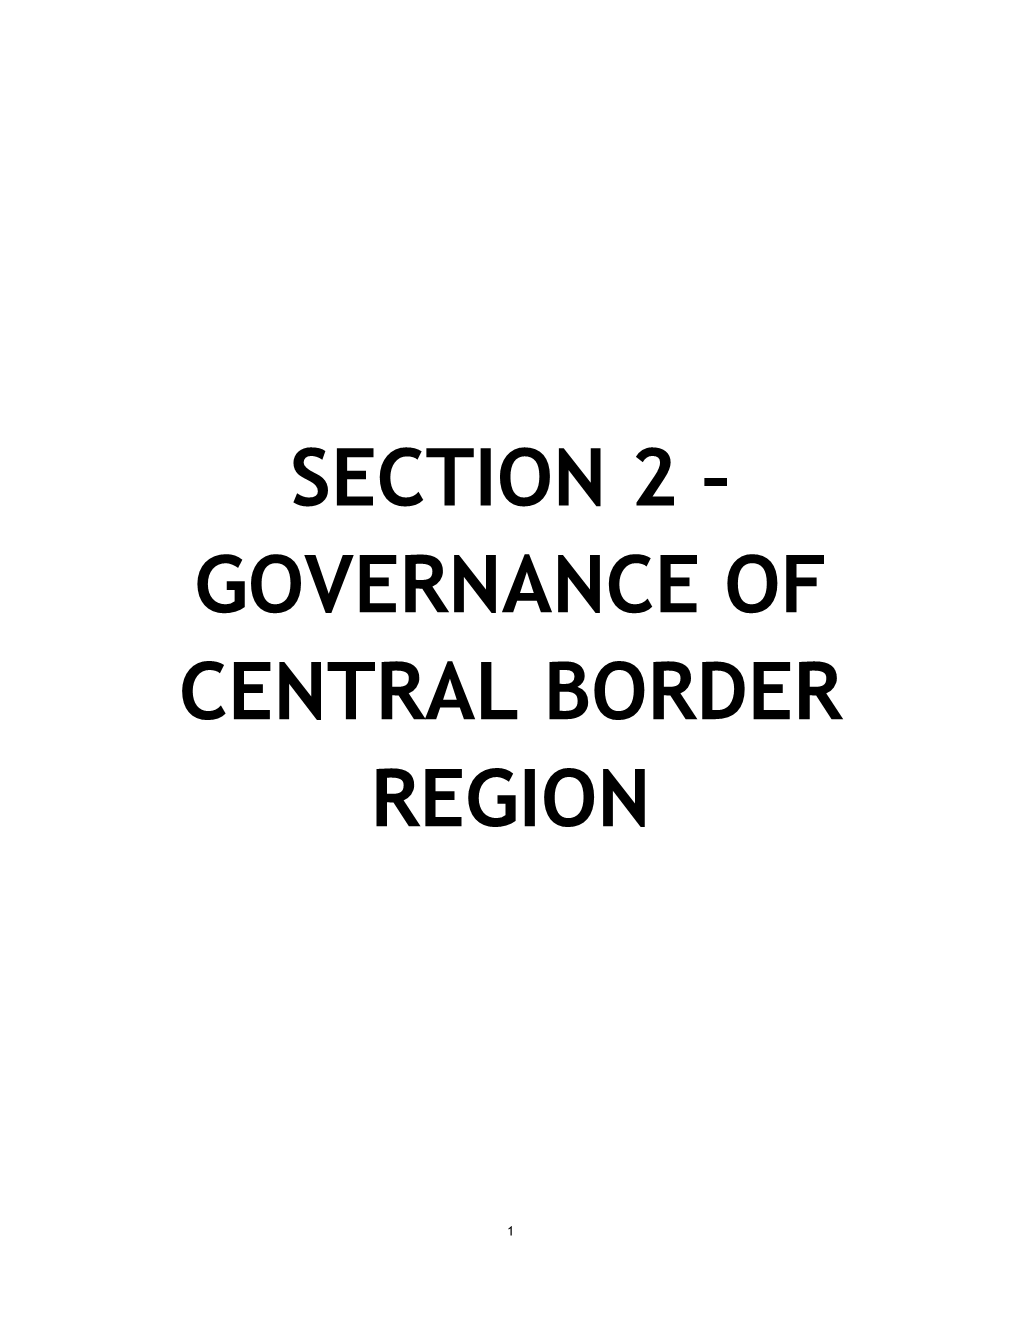 Section 2 – Governance of Central Border Region